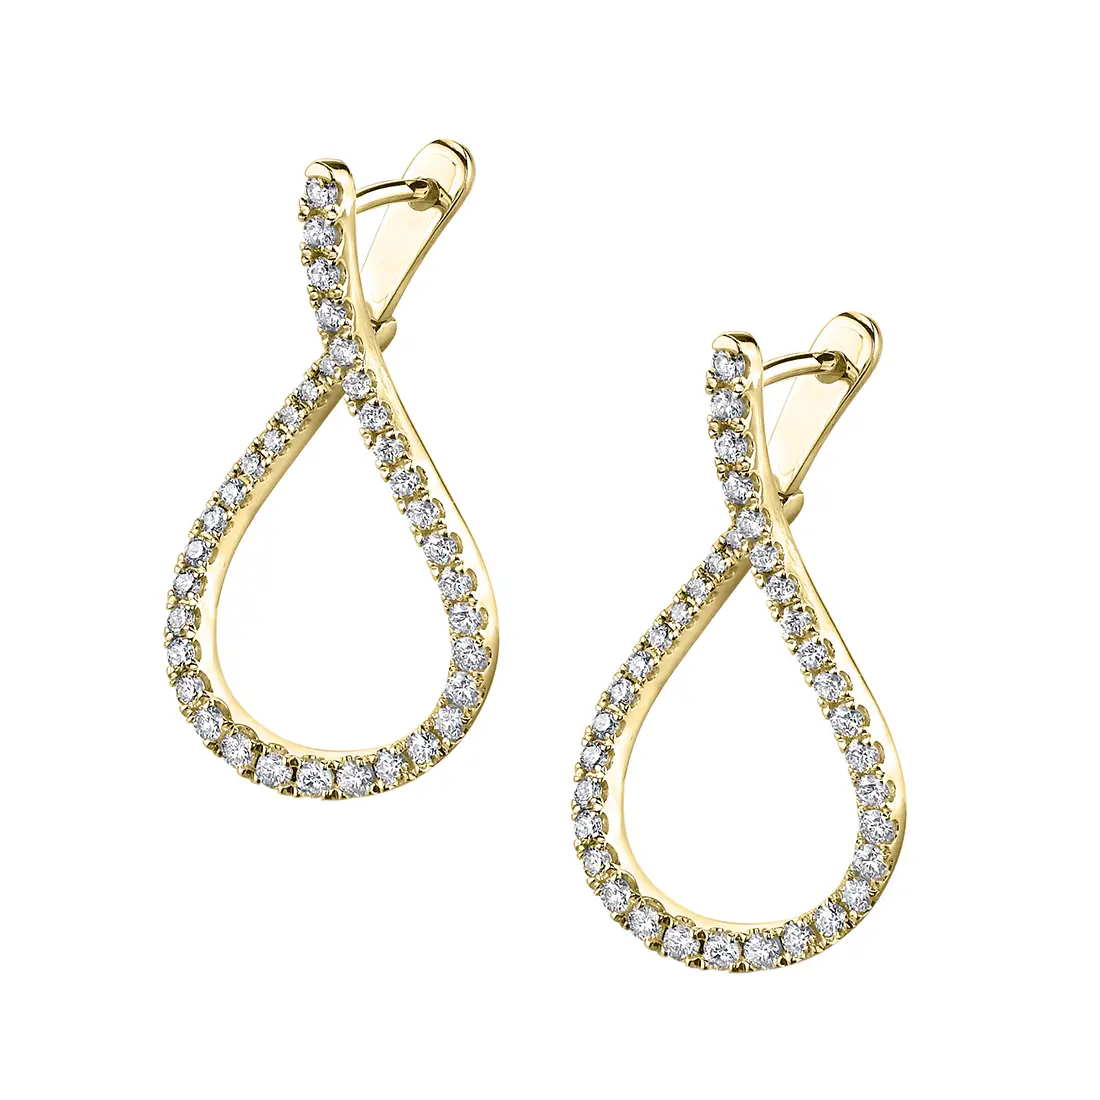 Unique Diamond Hoop Earrings - ER629-0100 in Yellow Gold